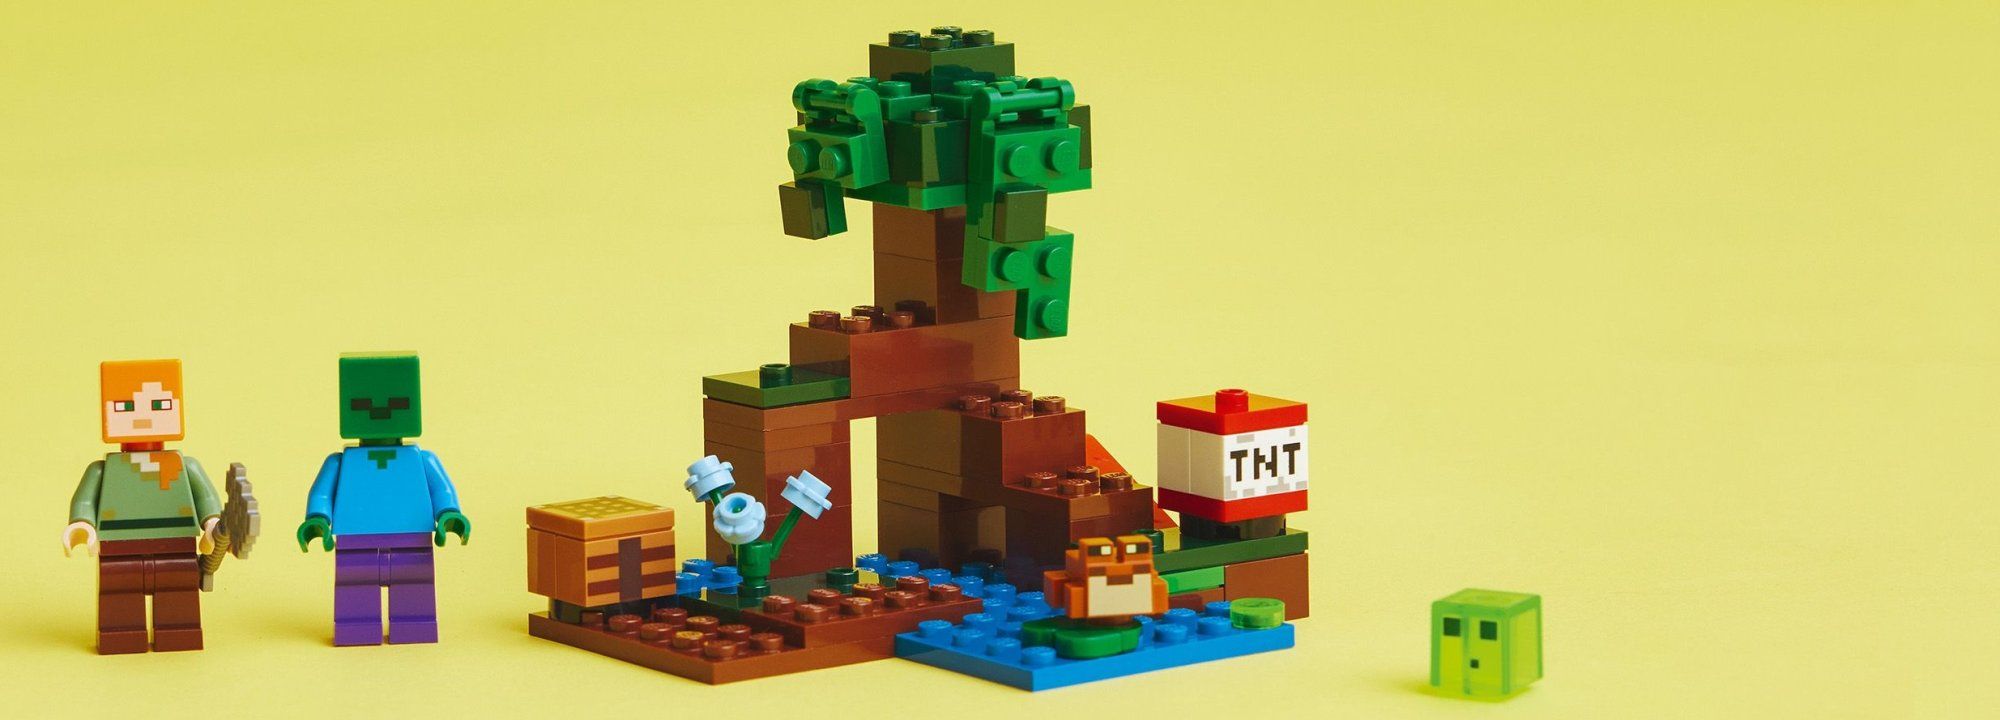 LEGO Minecraft 21240 Dobrodružstvo v bažine